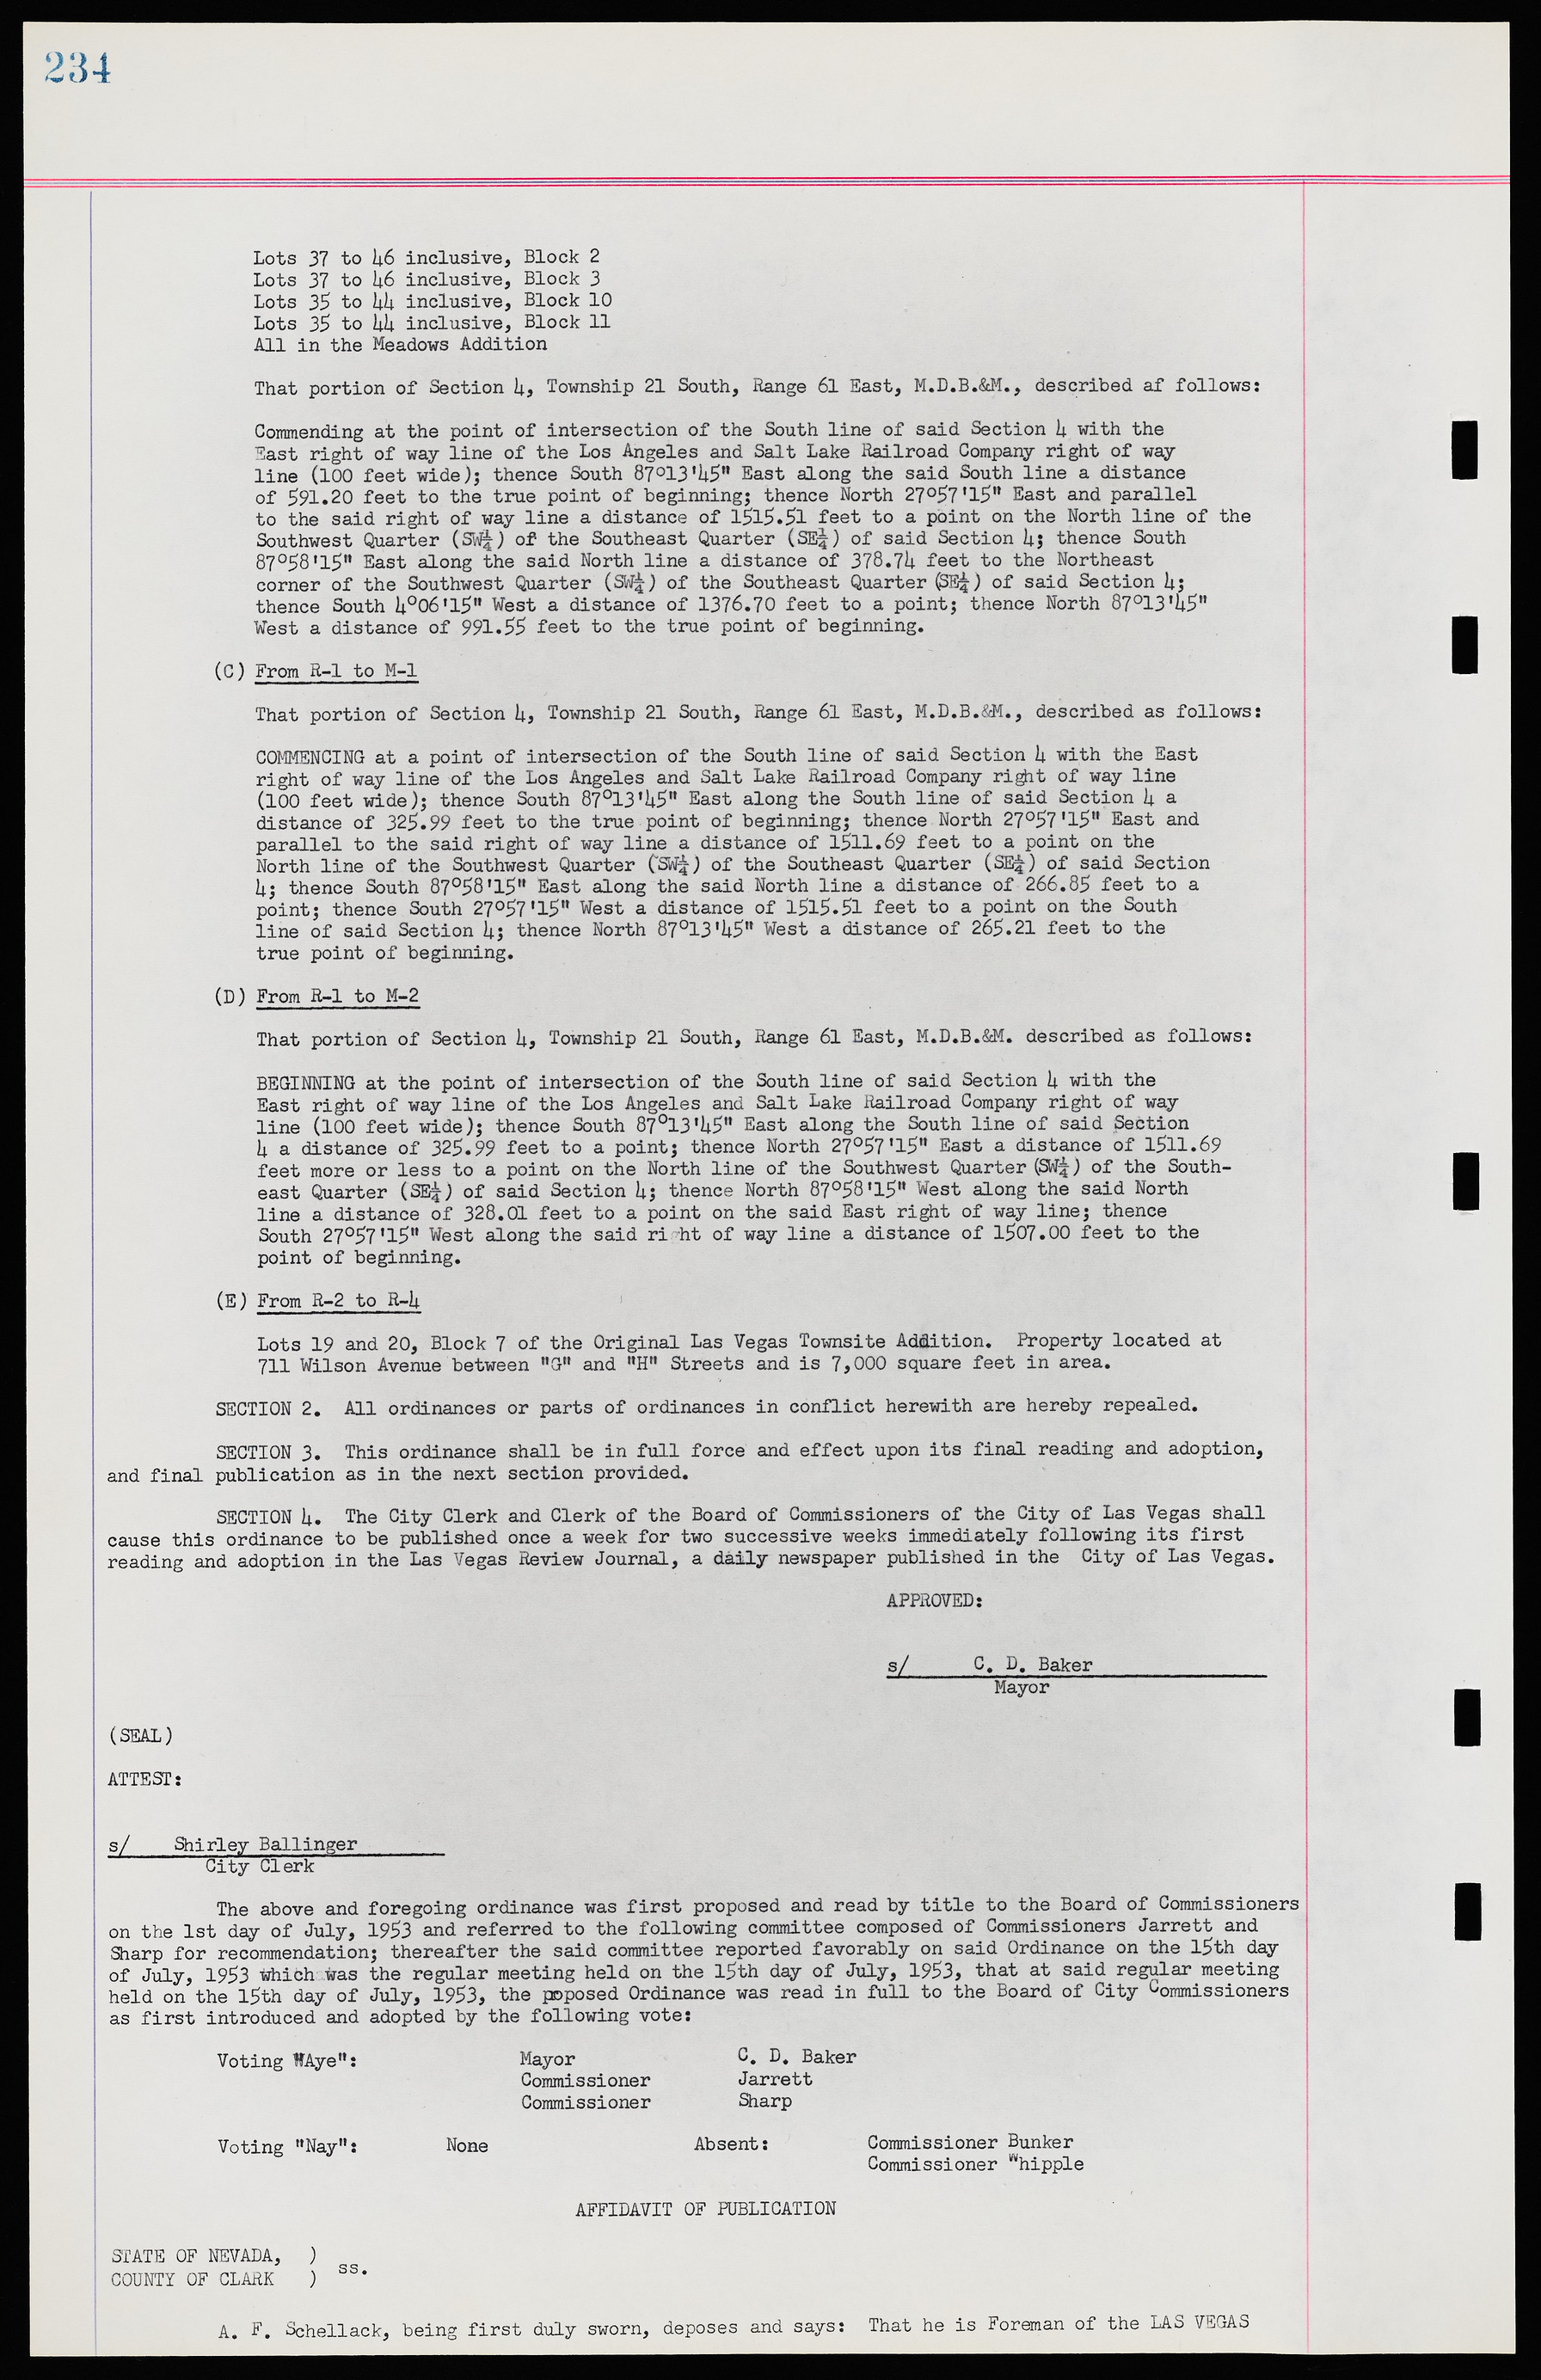 Las Vegas City Ordinances, November 13, 1950 to August 6, 1958, lvc000015-242